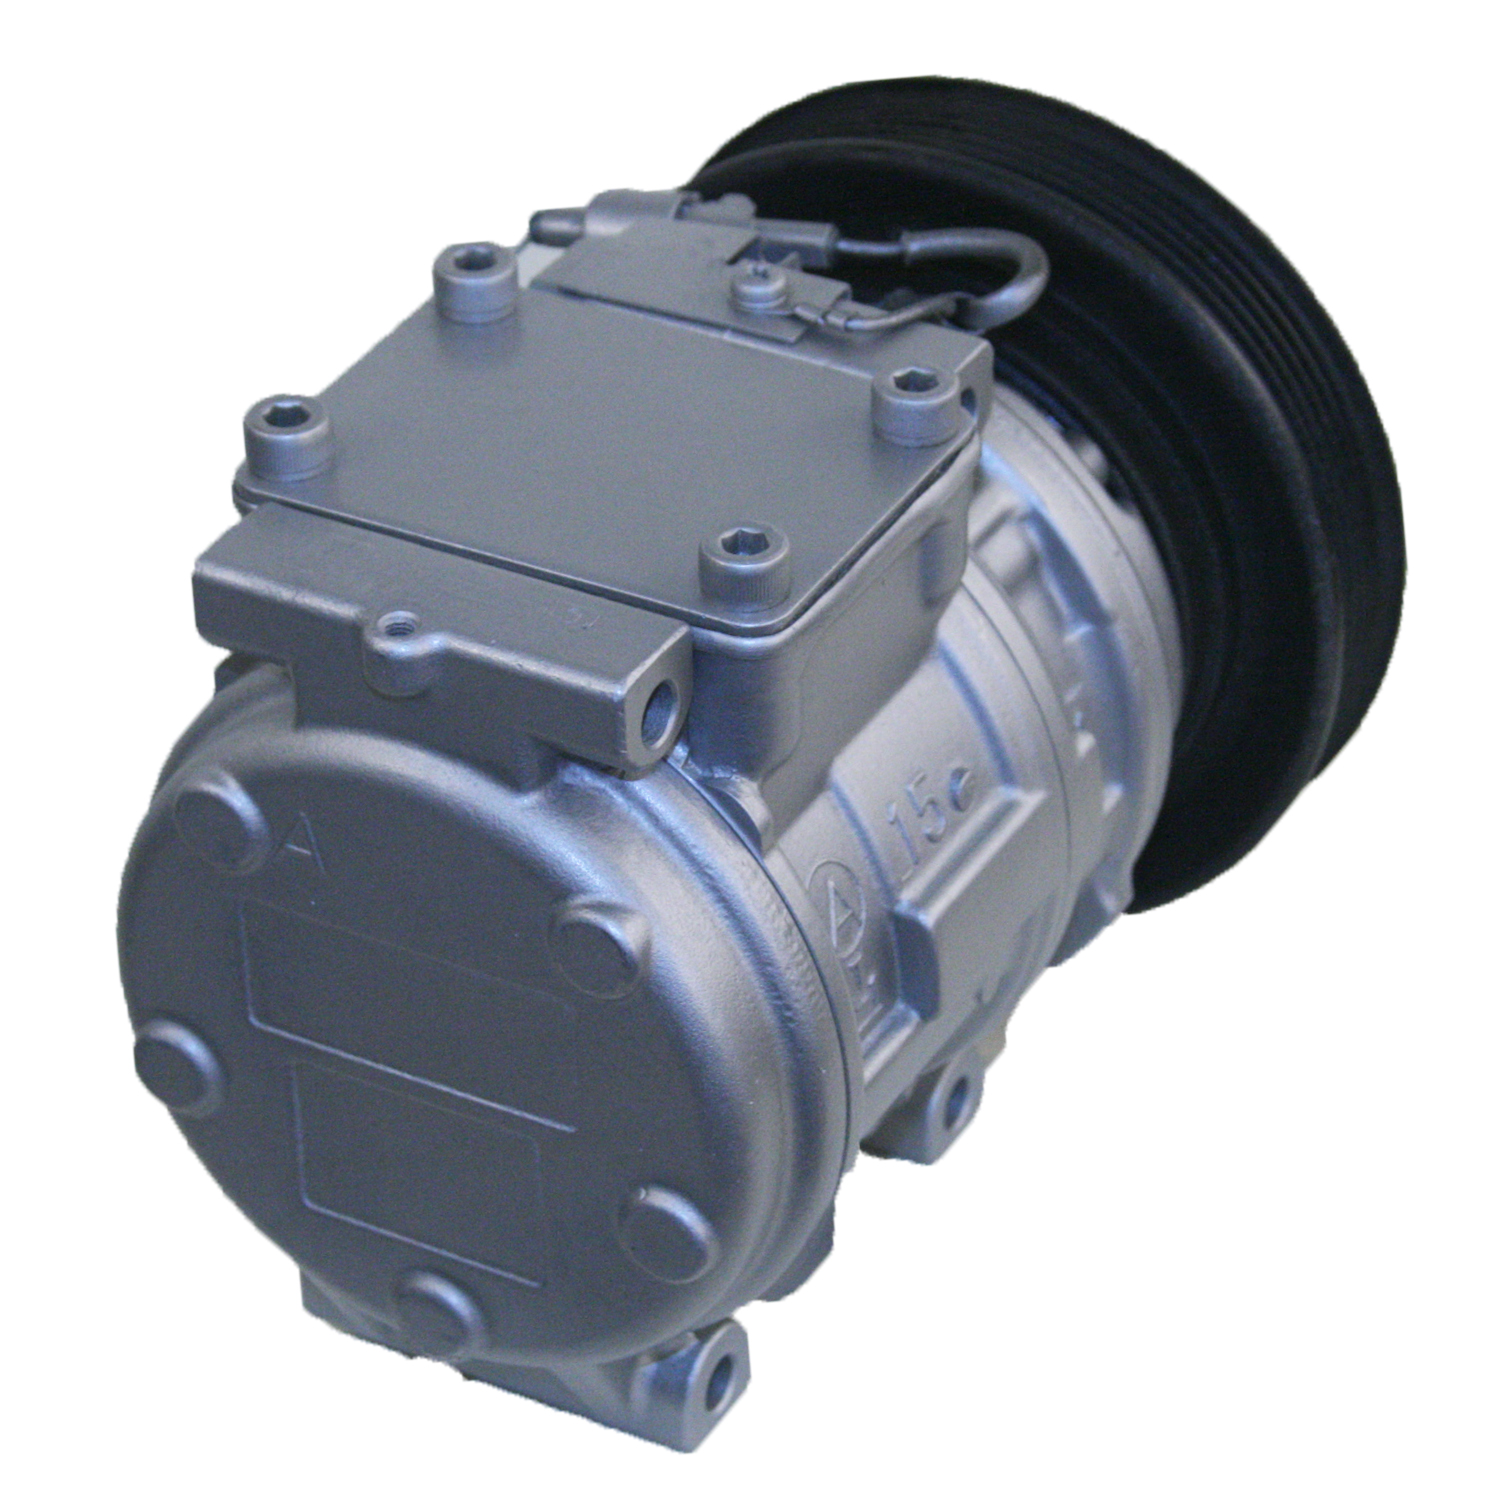 TCW Compressor 31213.601 Remanufactured Product Image field_60b6a13a6e67c